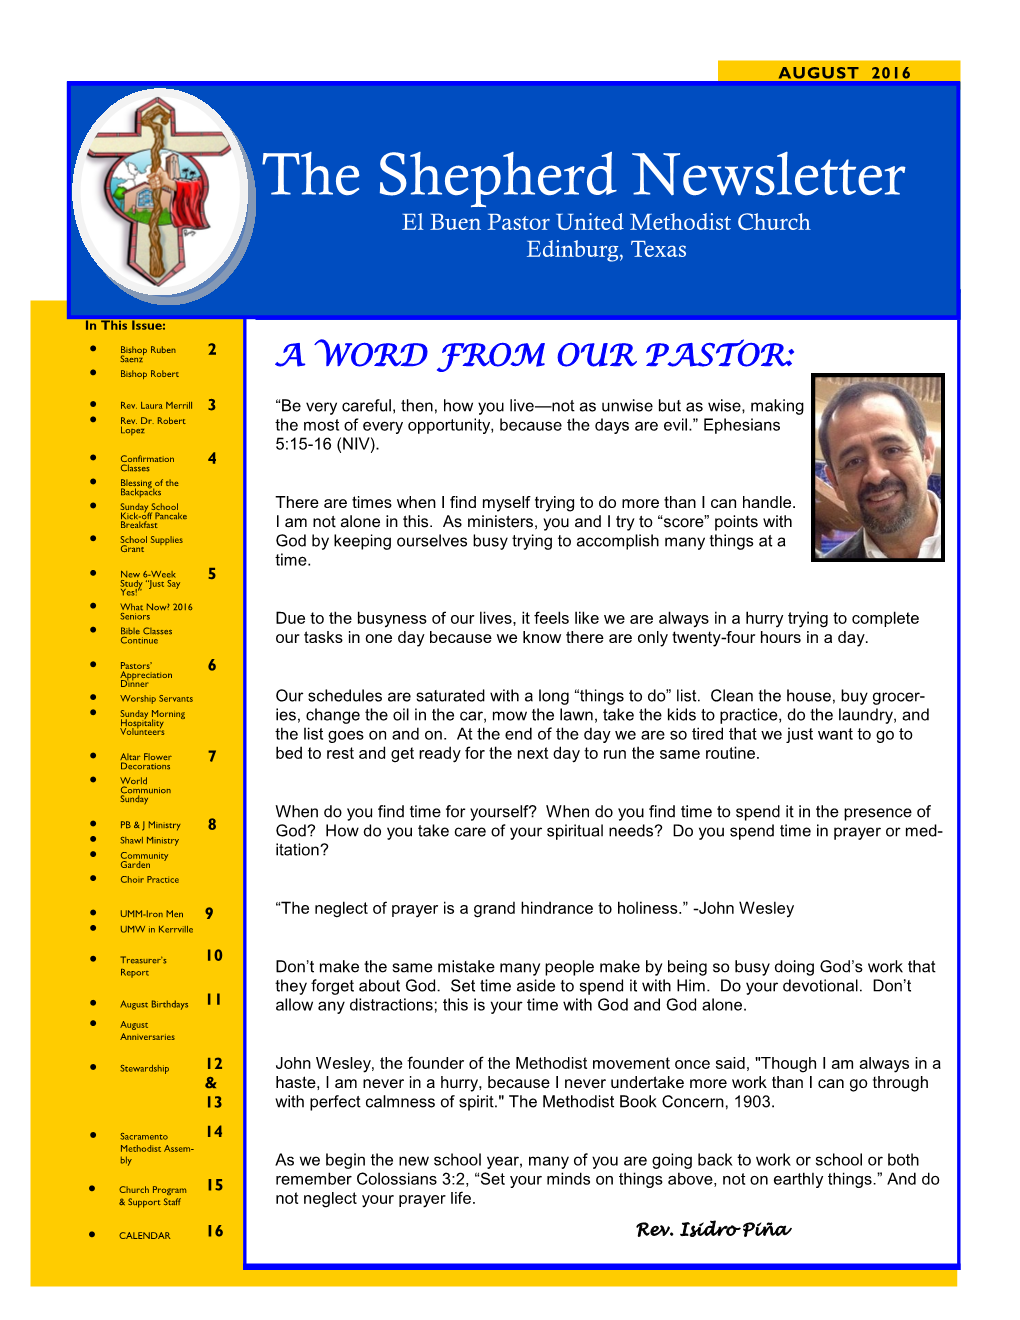 The Shepherd Newsletter El Buen Pastor United Methodist Church Edinburg, Texas